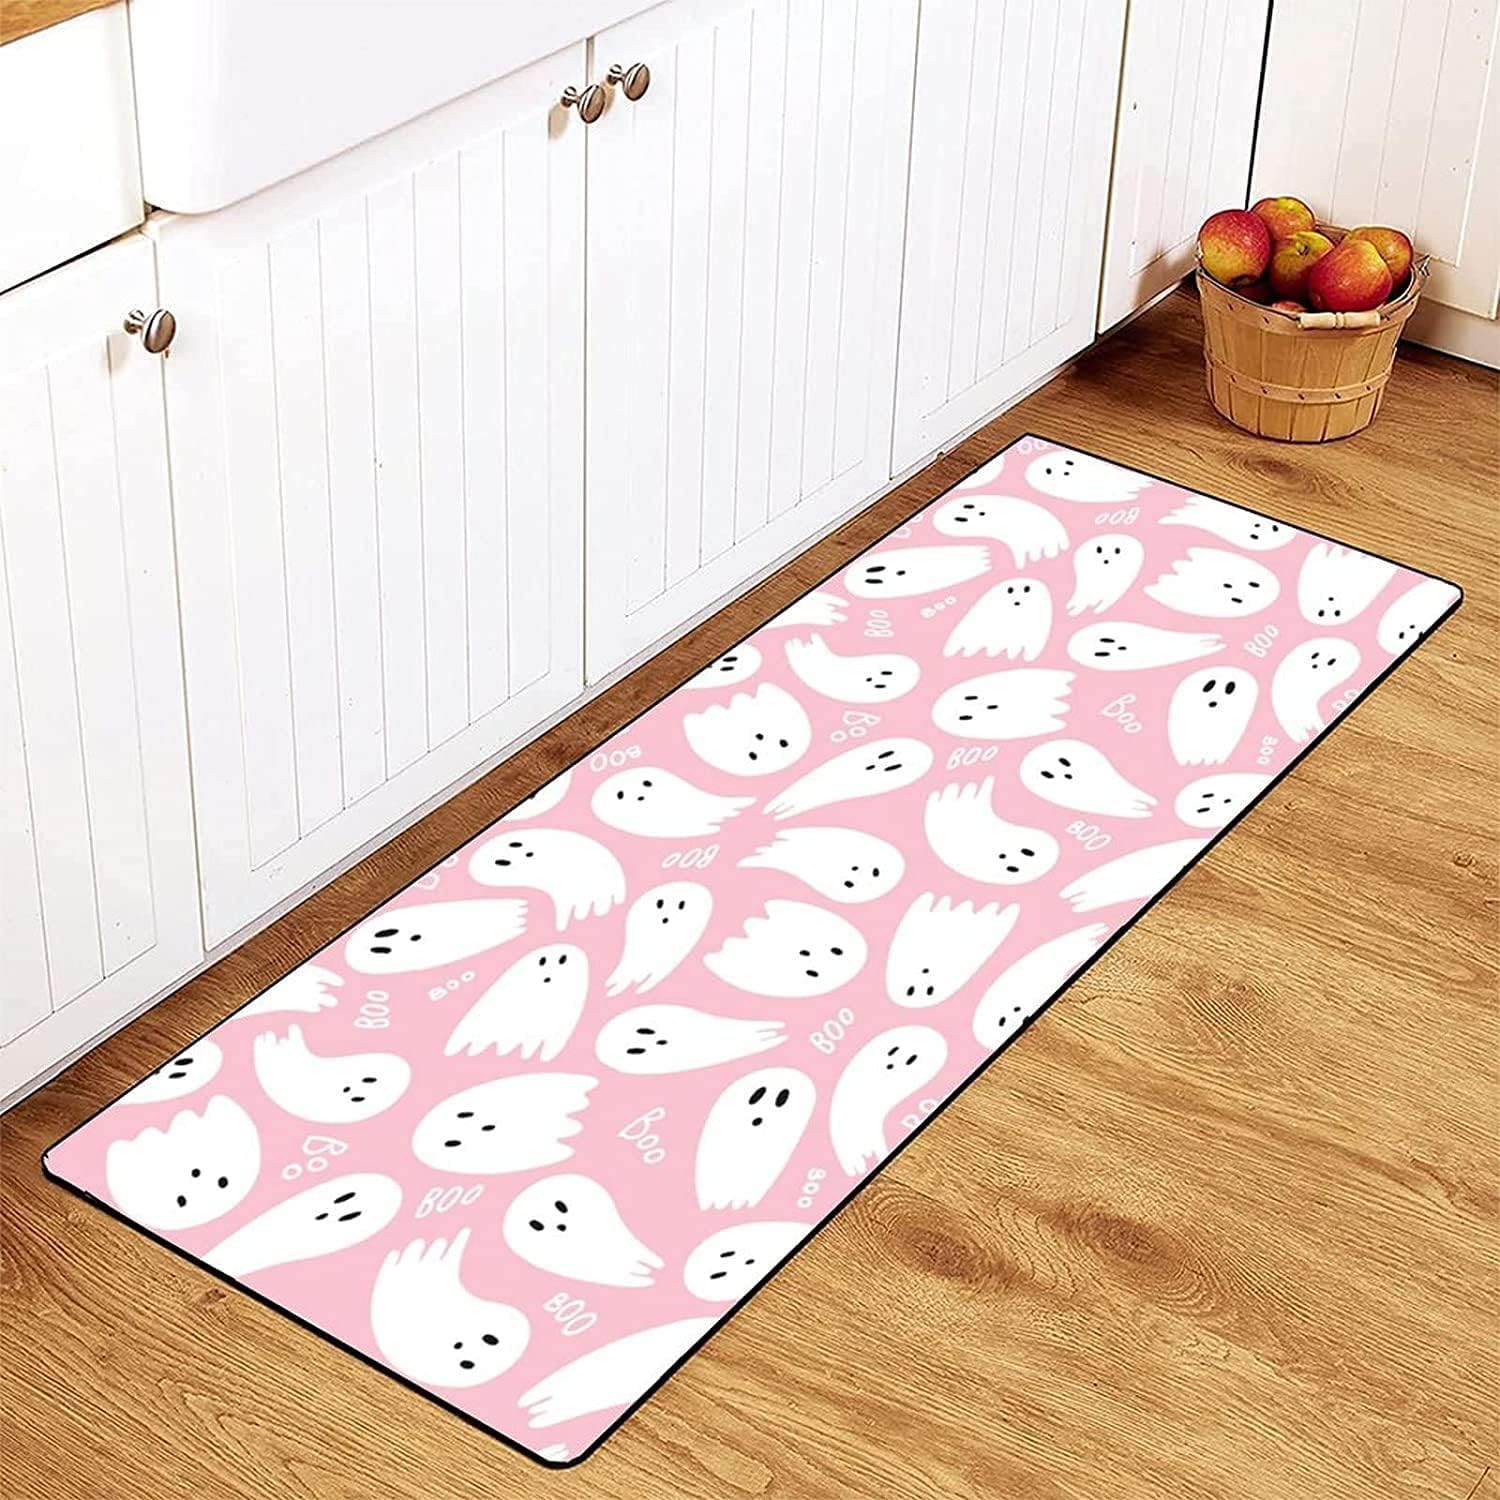 TsyTma Pink Cute Ghost Kitchen Rug Non-Slip Pink Halloween Kitchen Floor Mat Bathroom Rug Area Mat Carpet for Home Decor 39x20